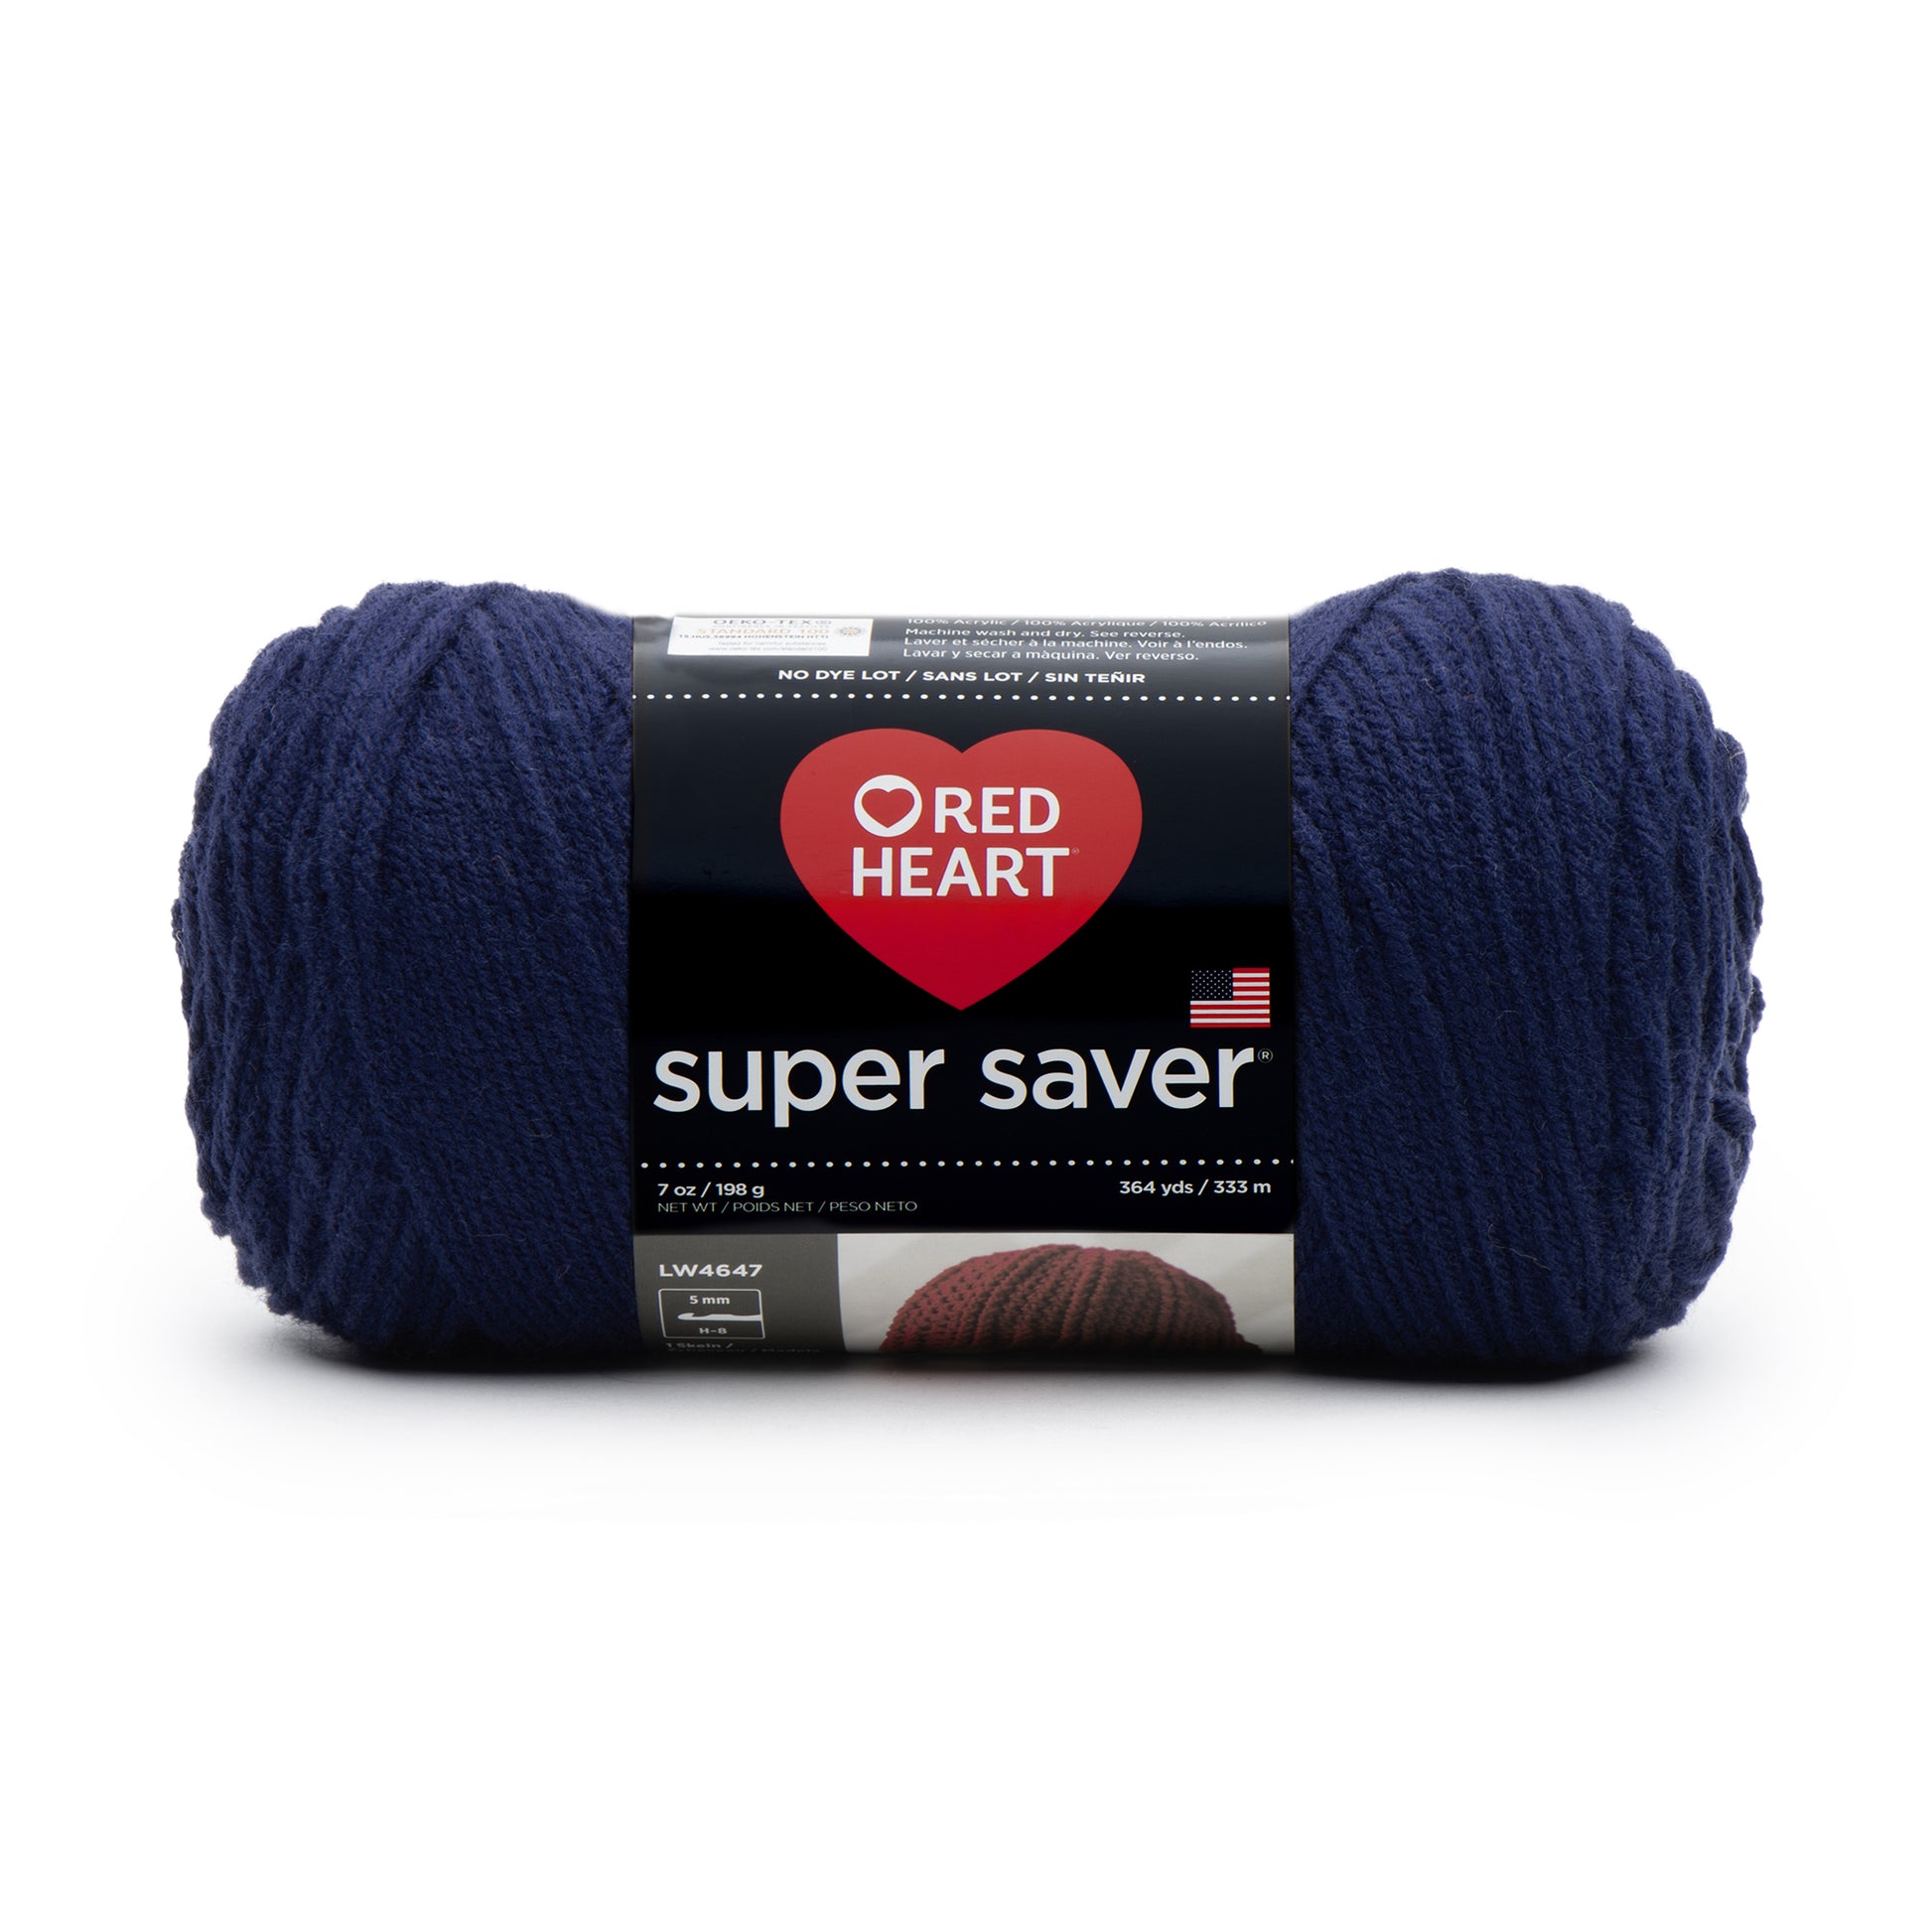 Red Heart Super Saver Yarn Soft Navy